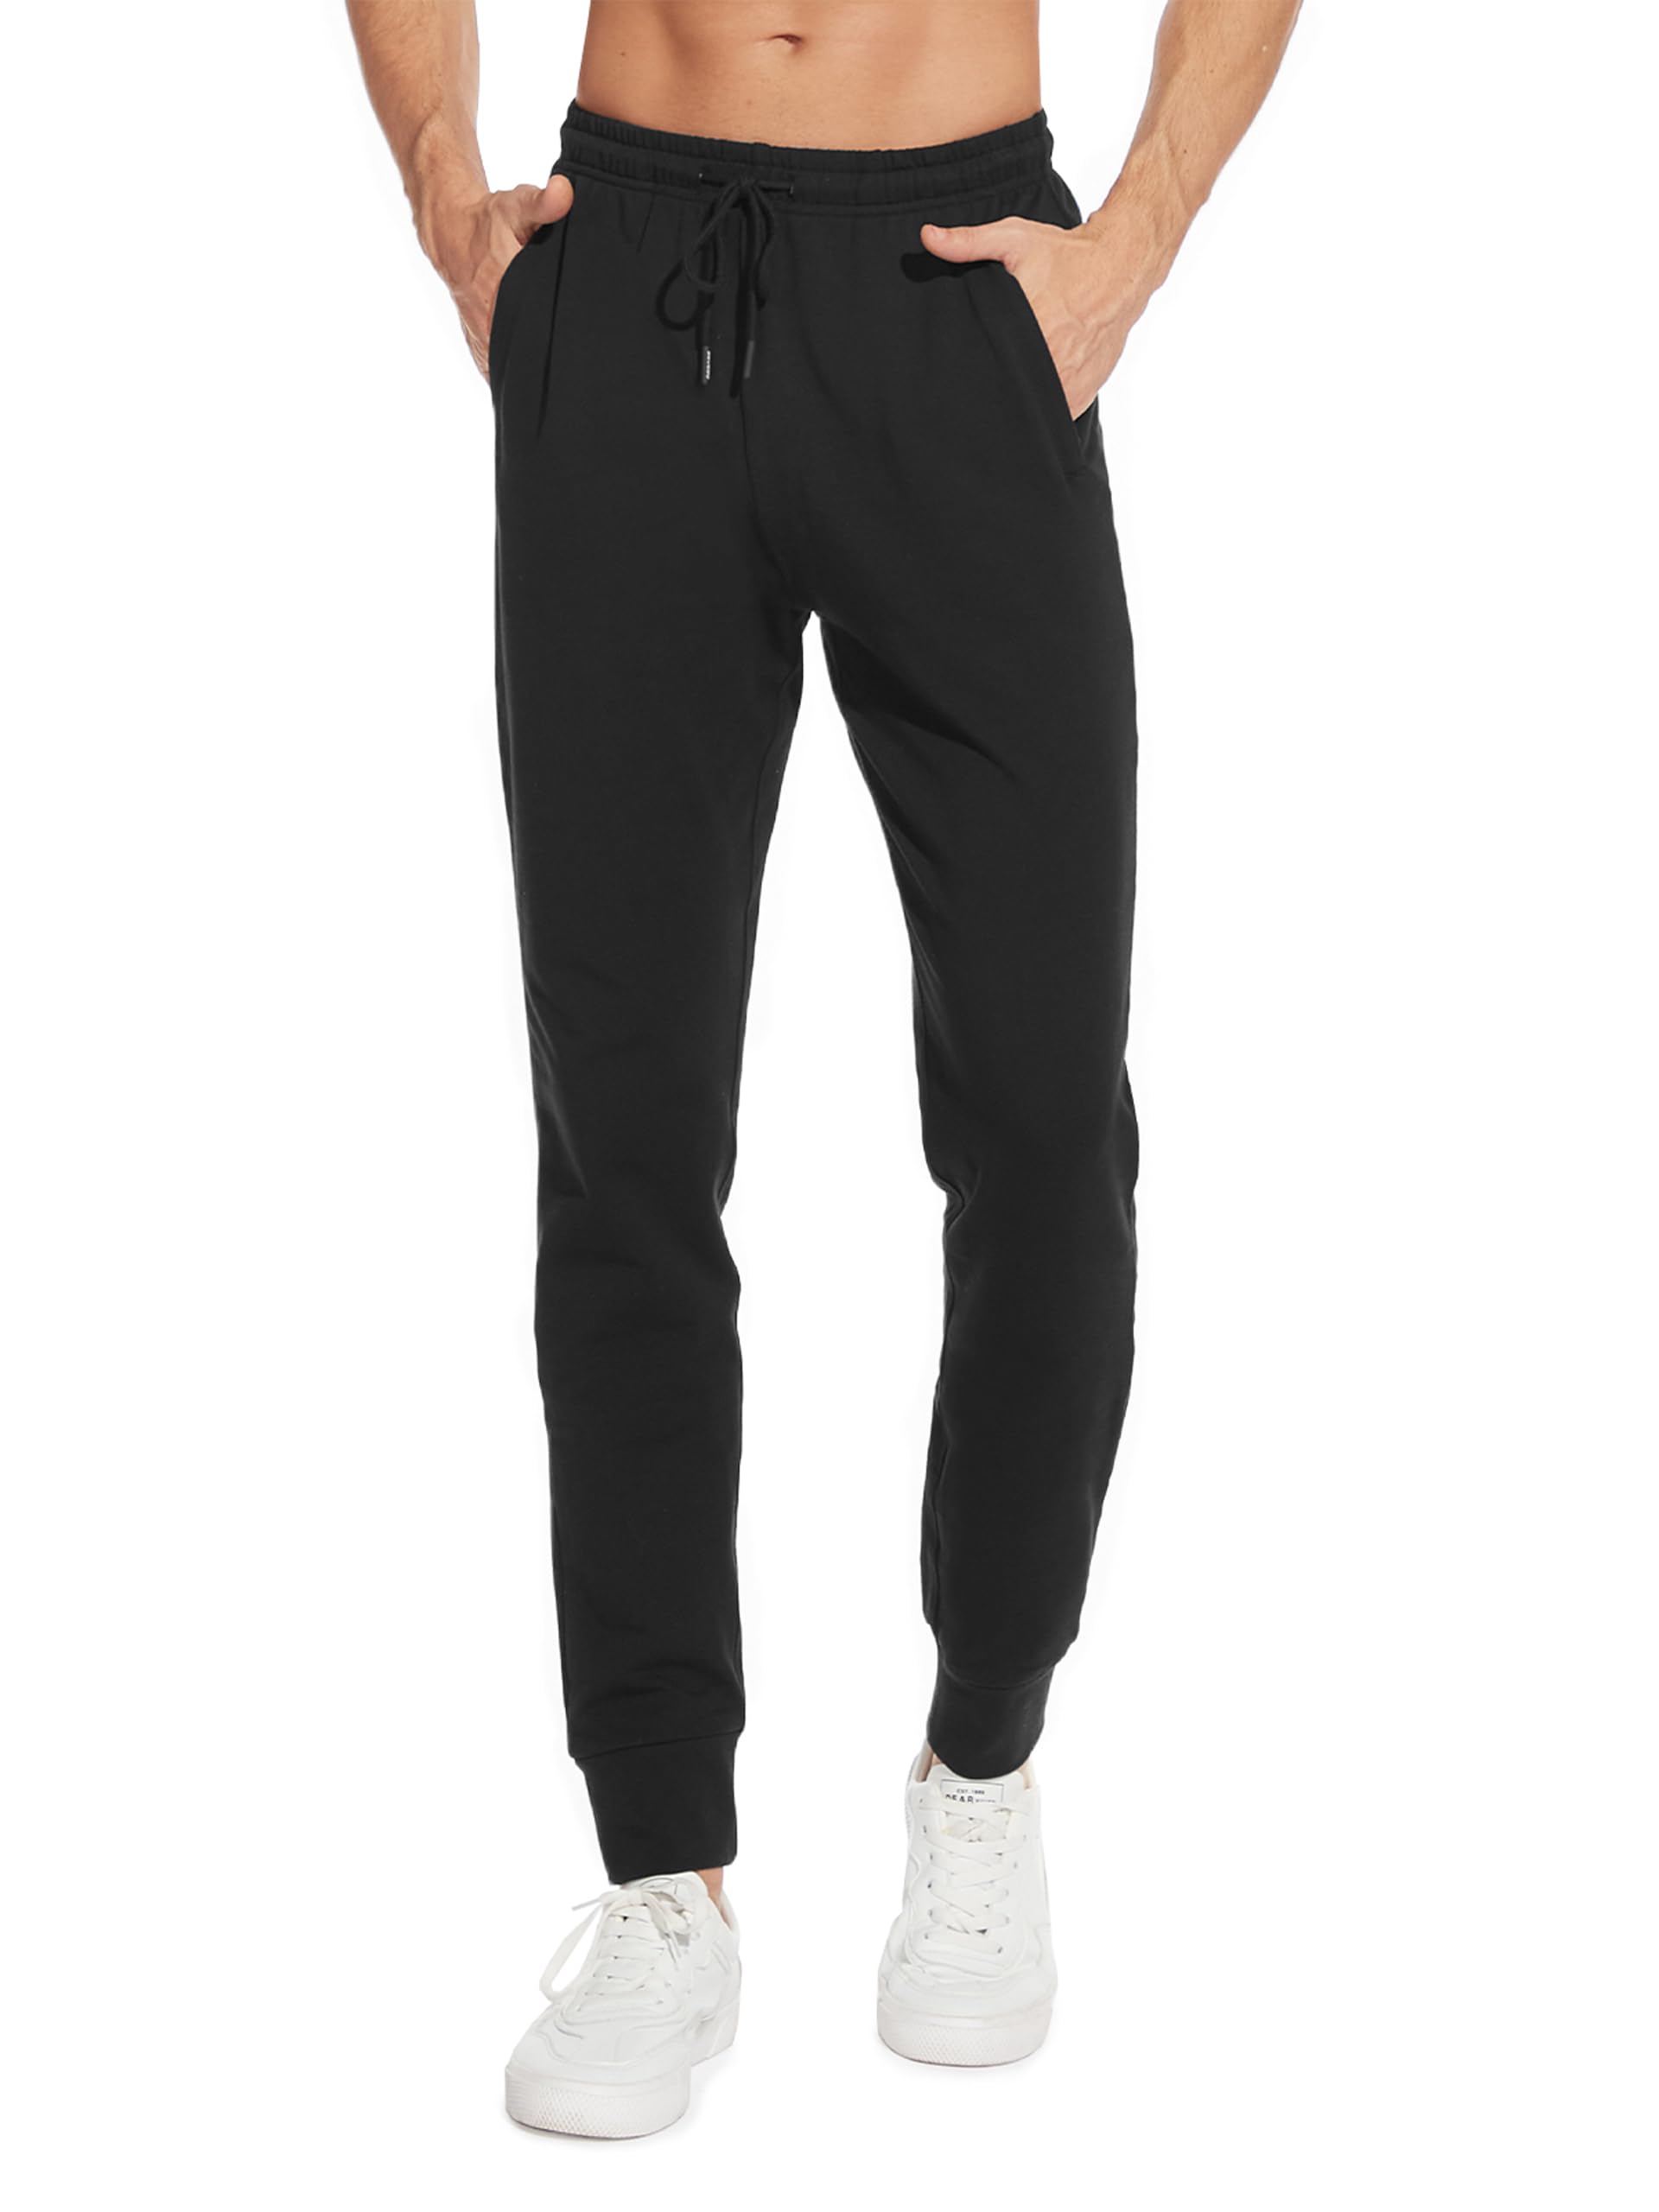 SEVEGO Men's 34" Inseam Tall Lightweight Cotton Joggers with Zipper Pockets Active Sweatpants Work Sports Track Pants Black XL